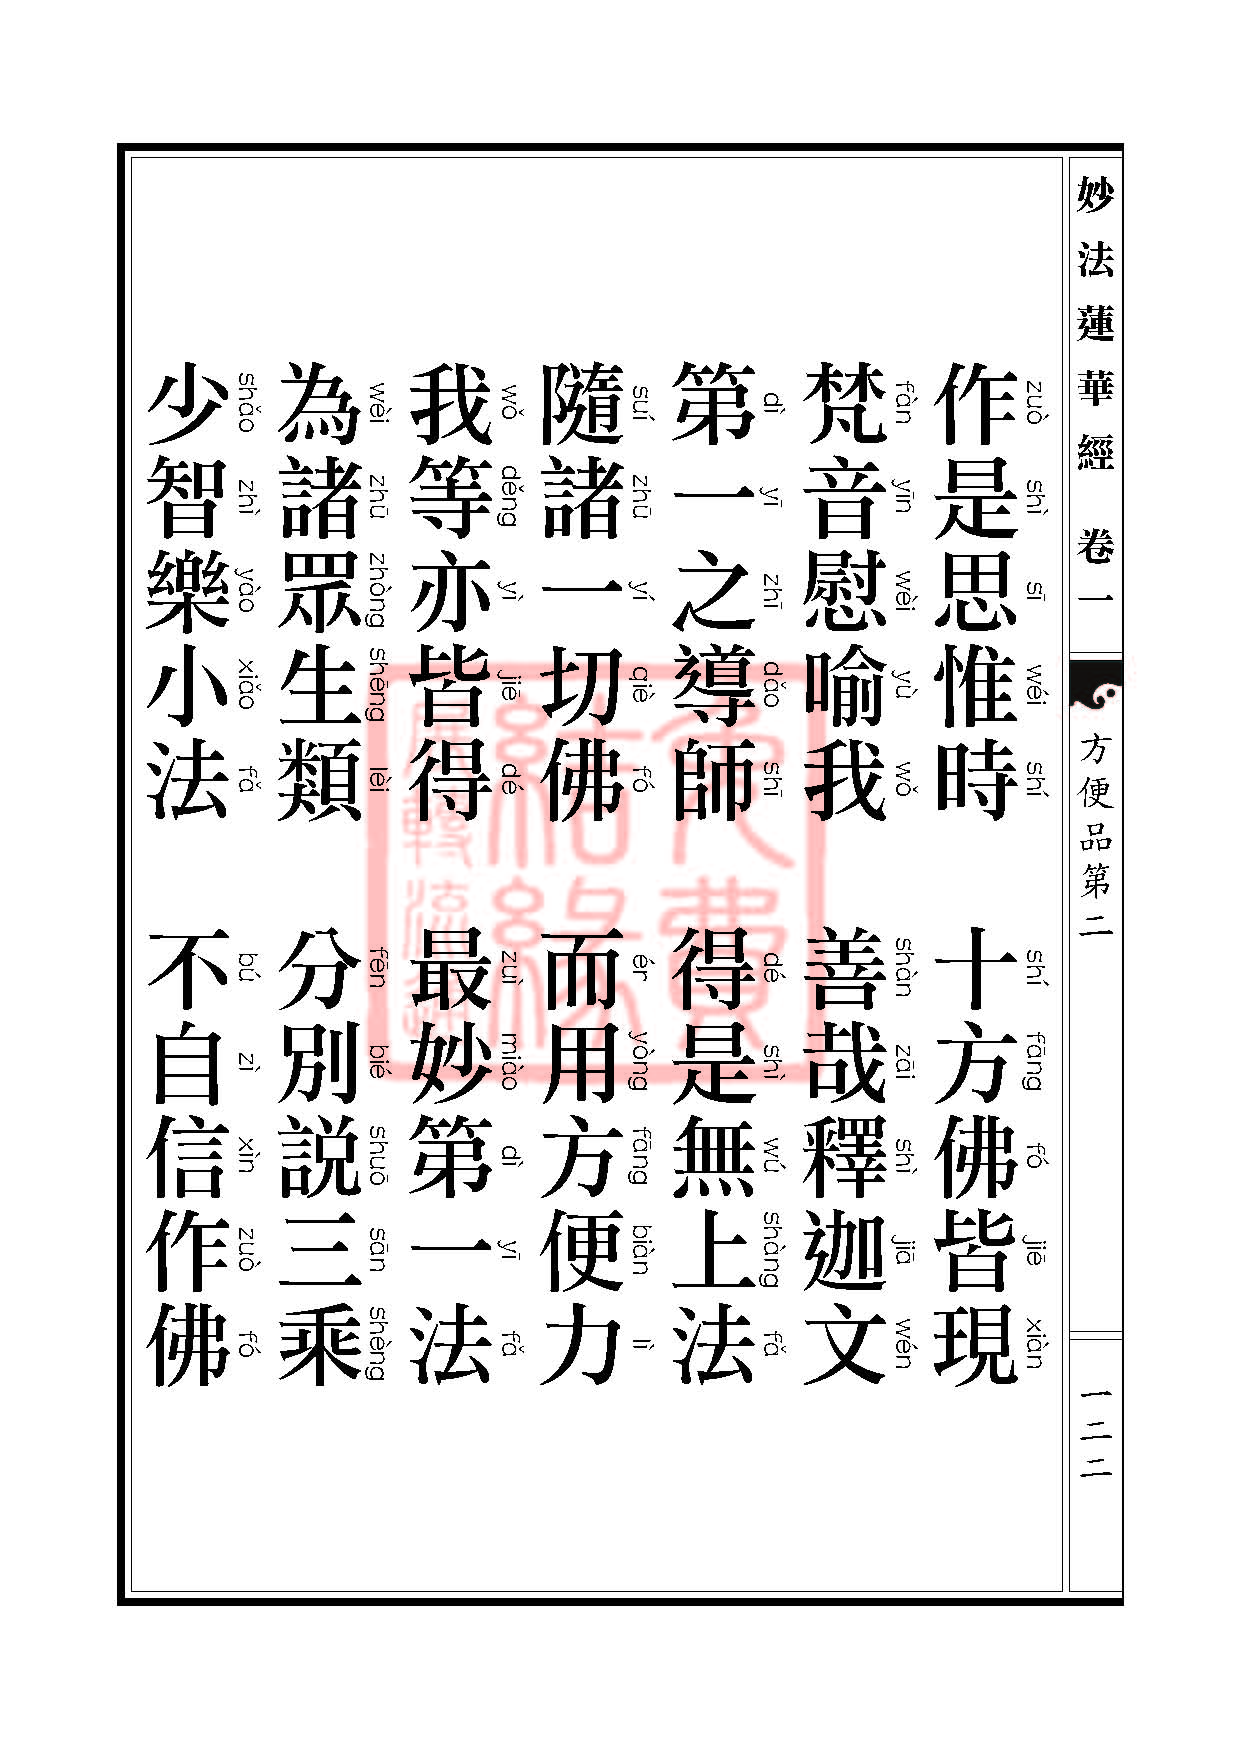 Book_FHJ_HK-A6-PY_Web_页面_122.jpg